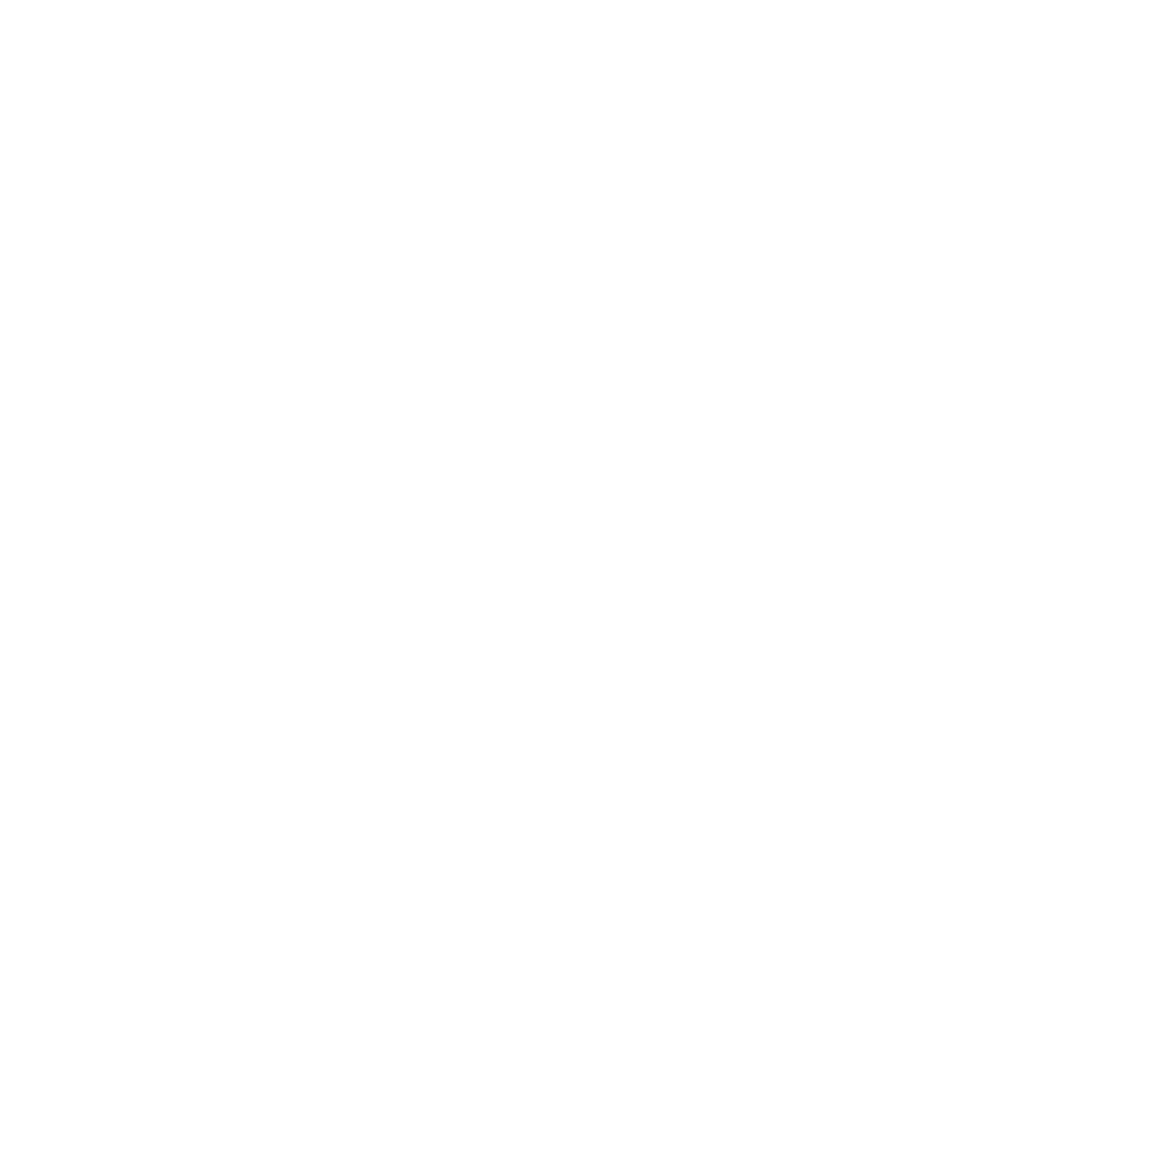 Carrillo Sala